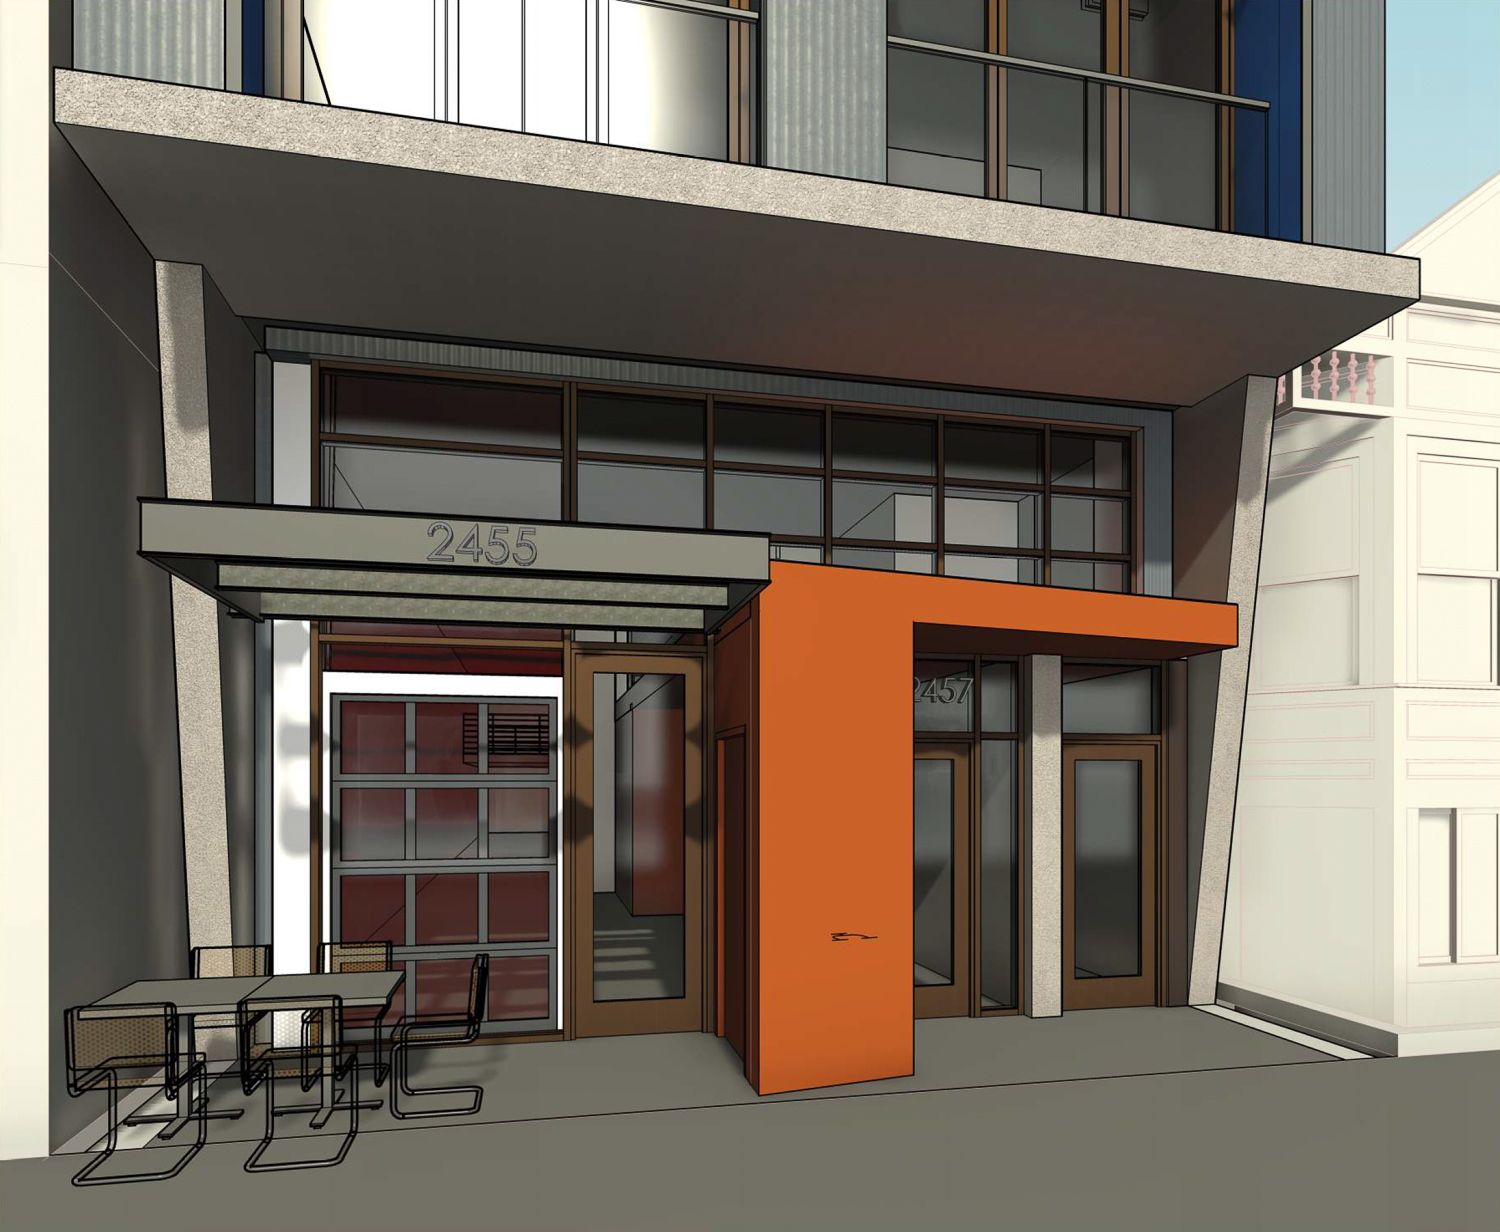 2455 Harrison Street entry view, rendering by Kerman Morris Architects